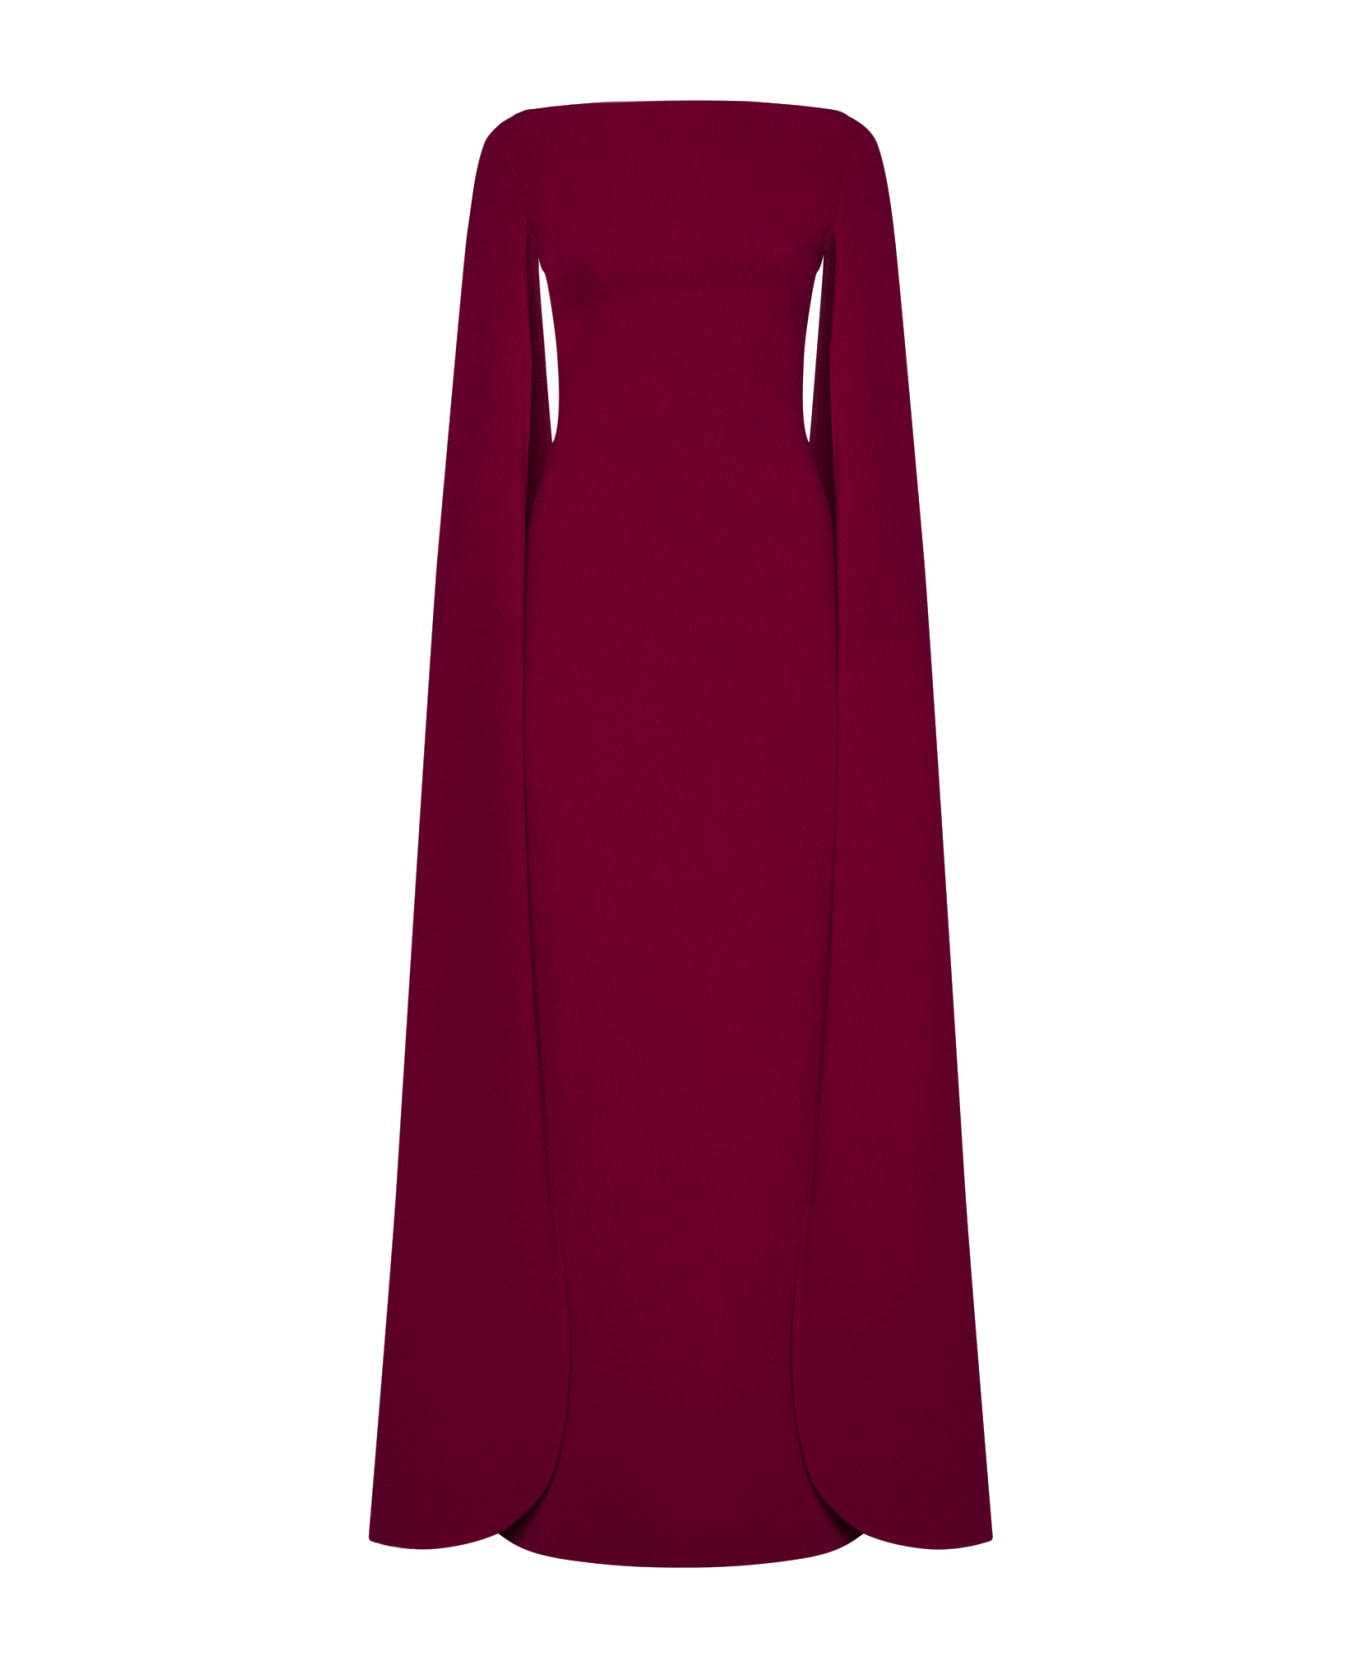 Solace London Dress - Fuchsia